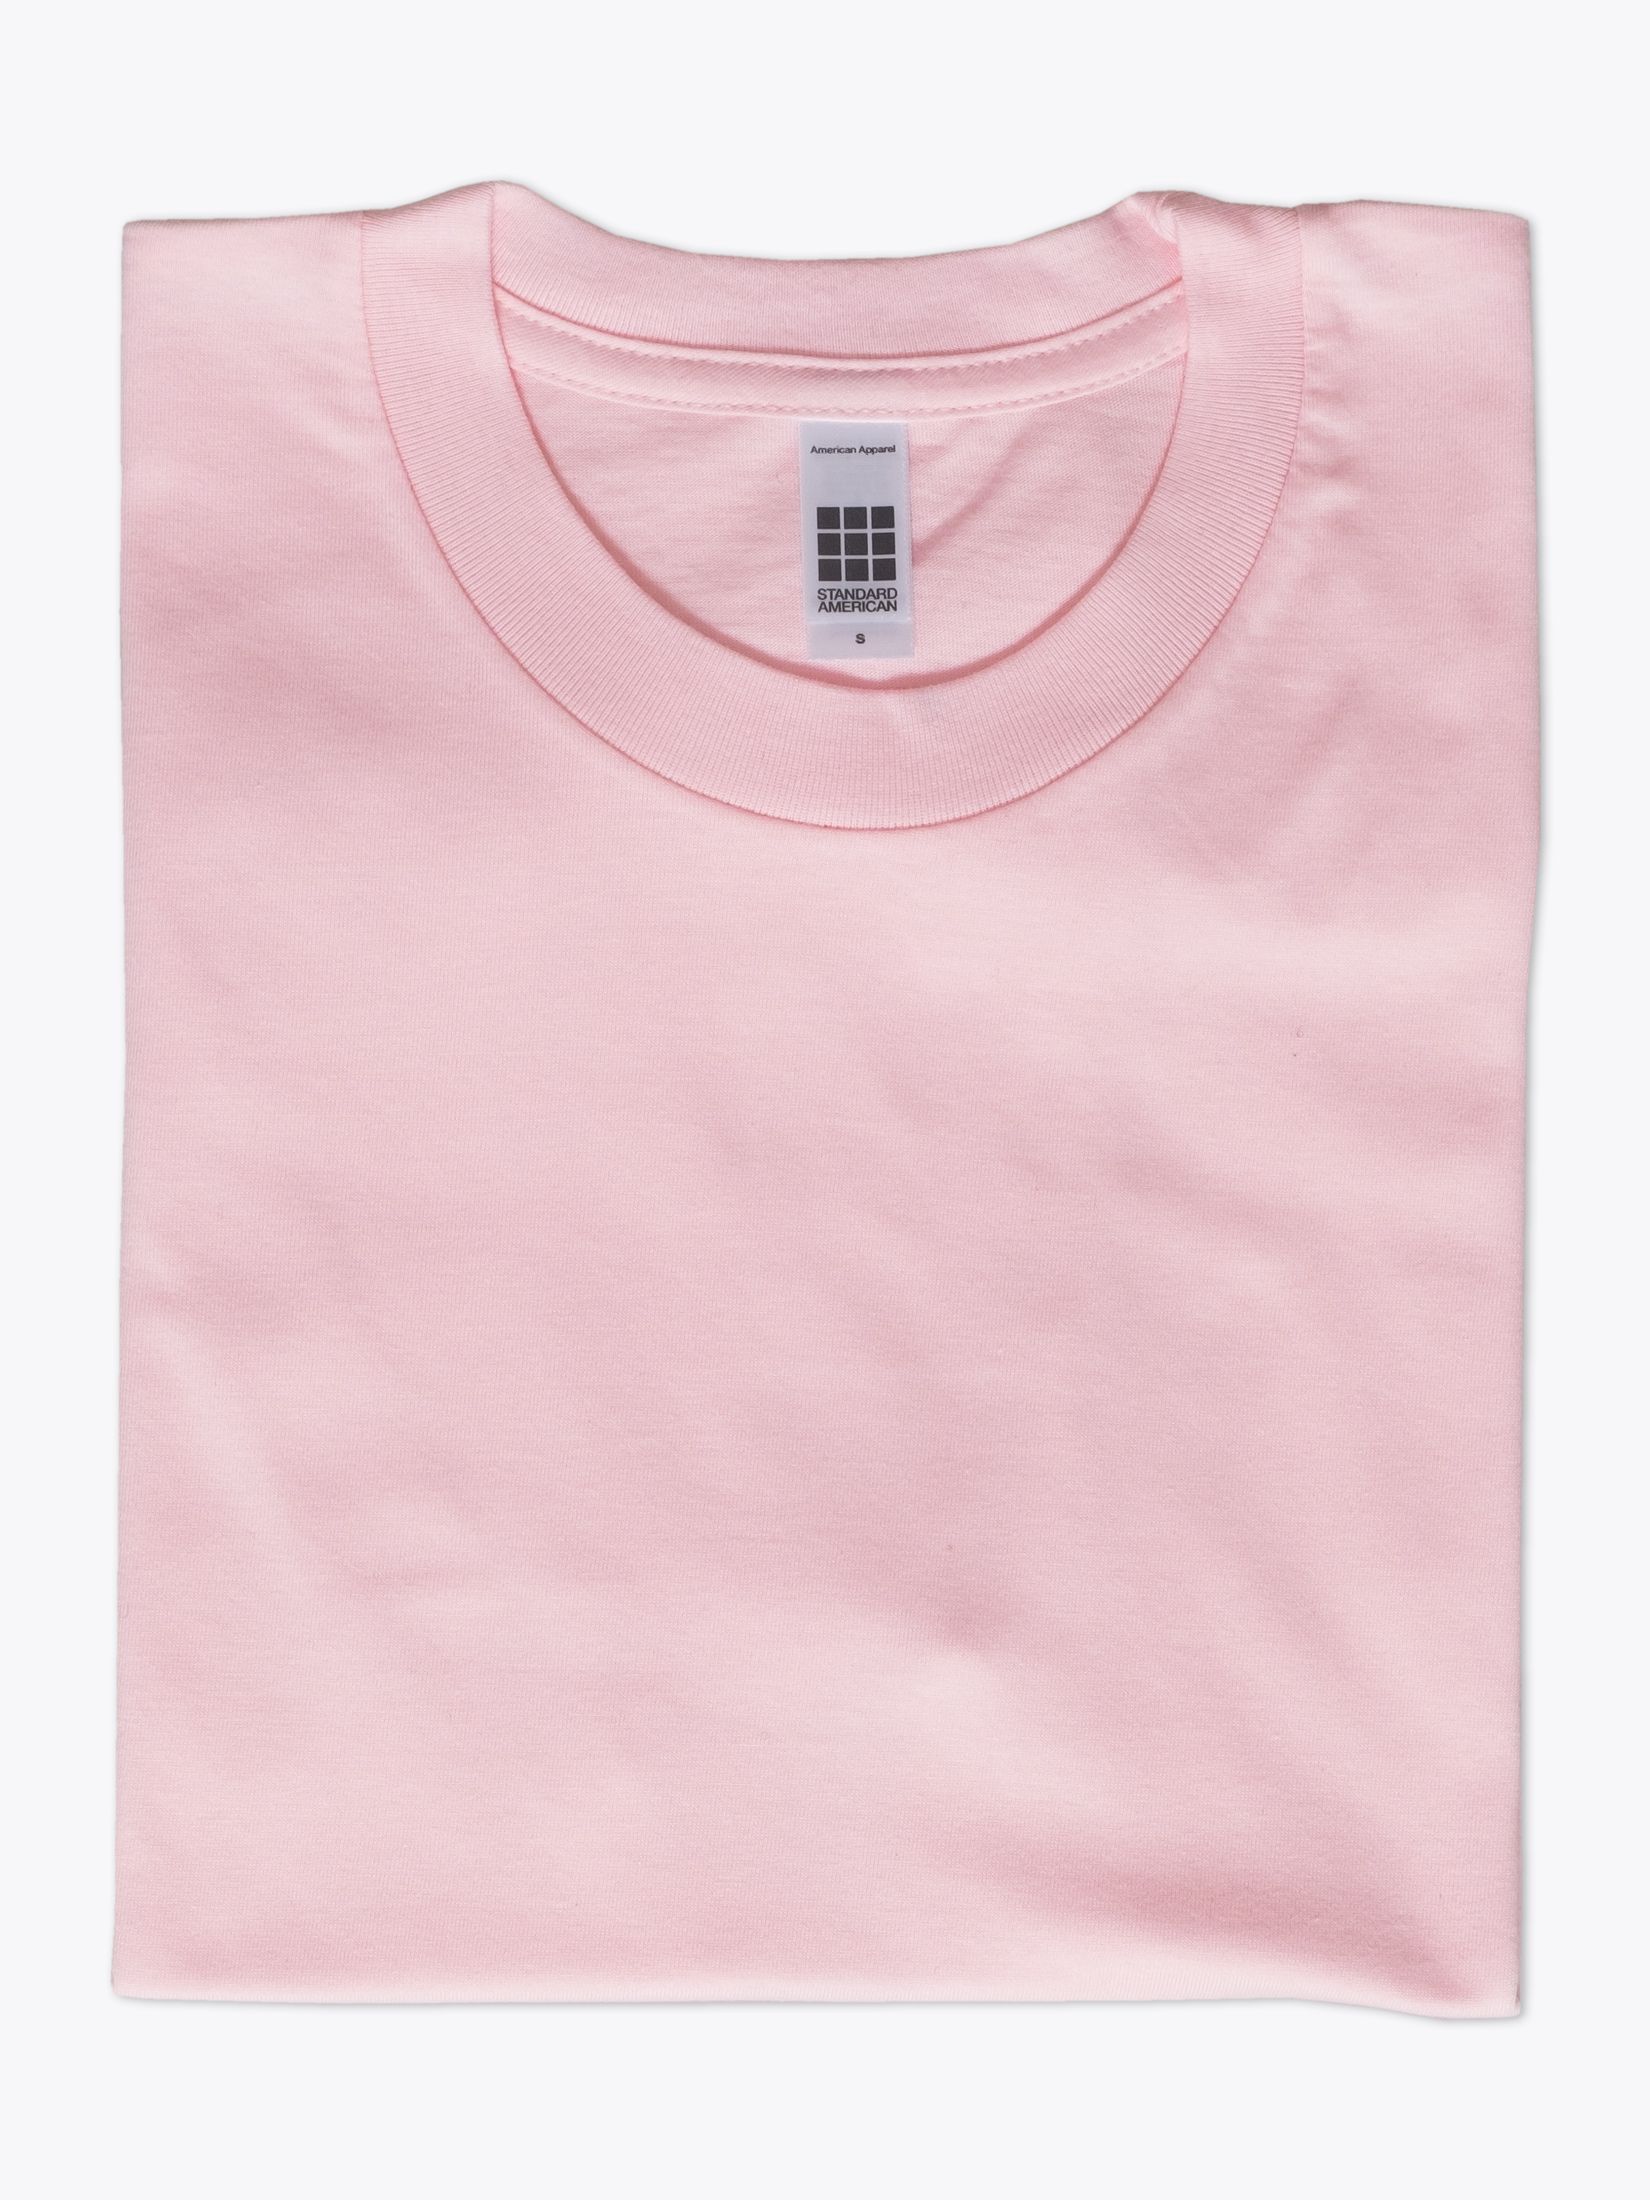 American Apparel 2001 Men's Fine Jersey S/S T-shirt Light Pink